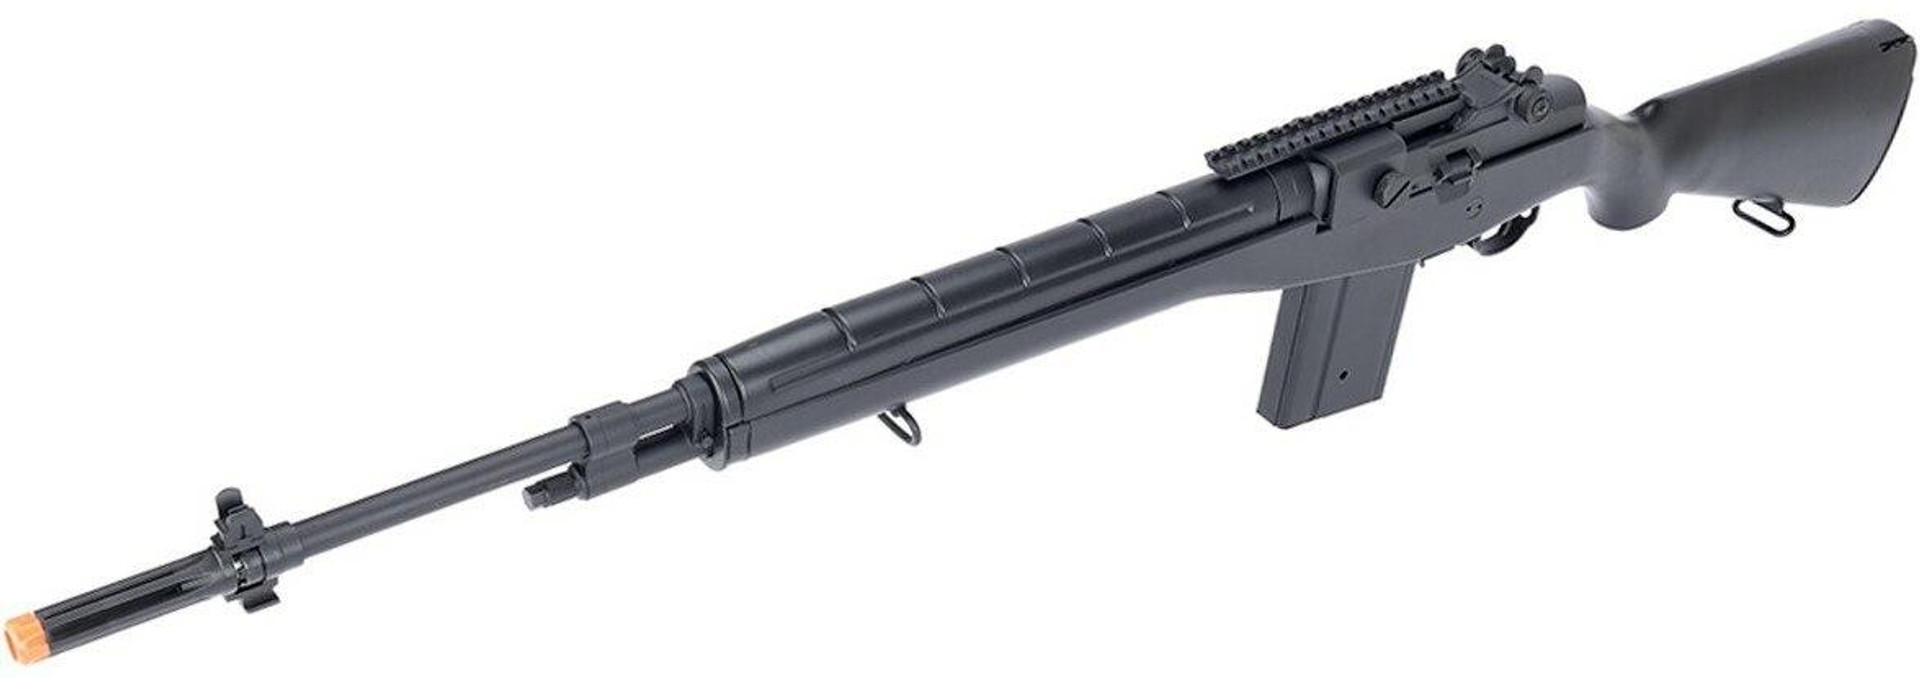 AGM M14 SOCOM DMR AEG Airsoft Rifle w/ Battery & Charger, Black